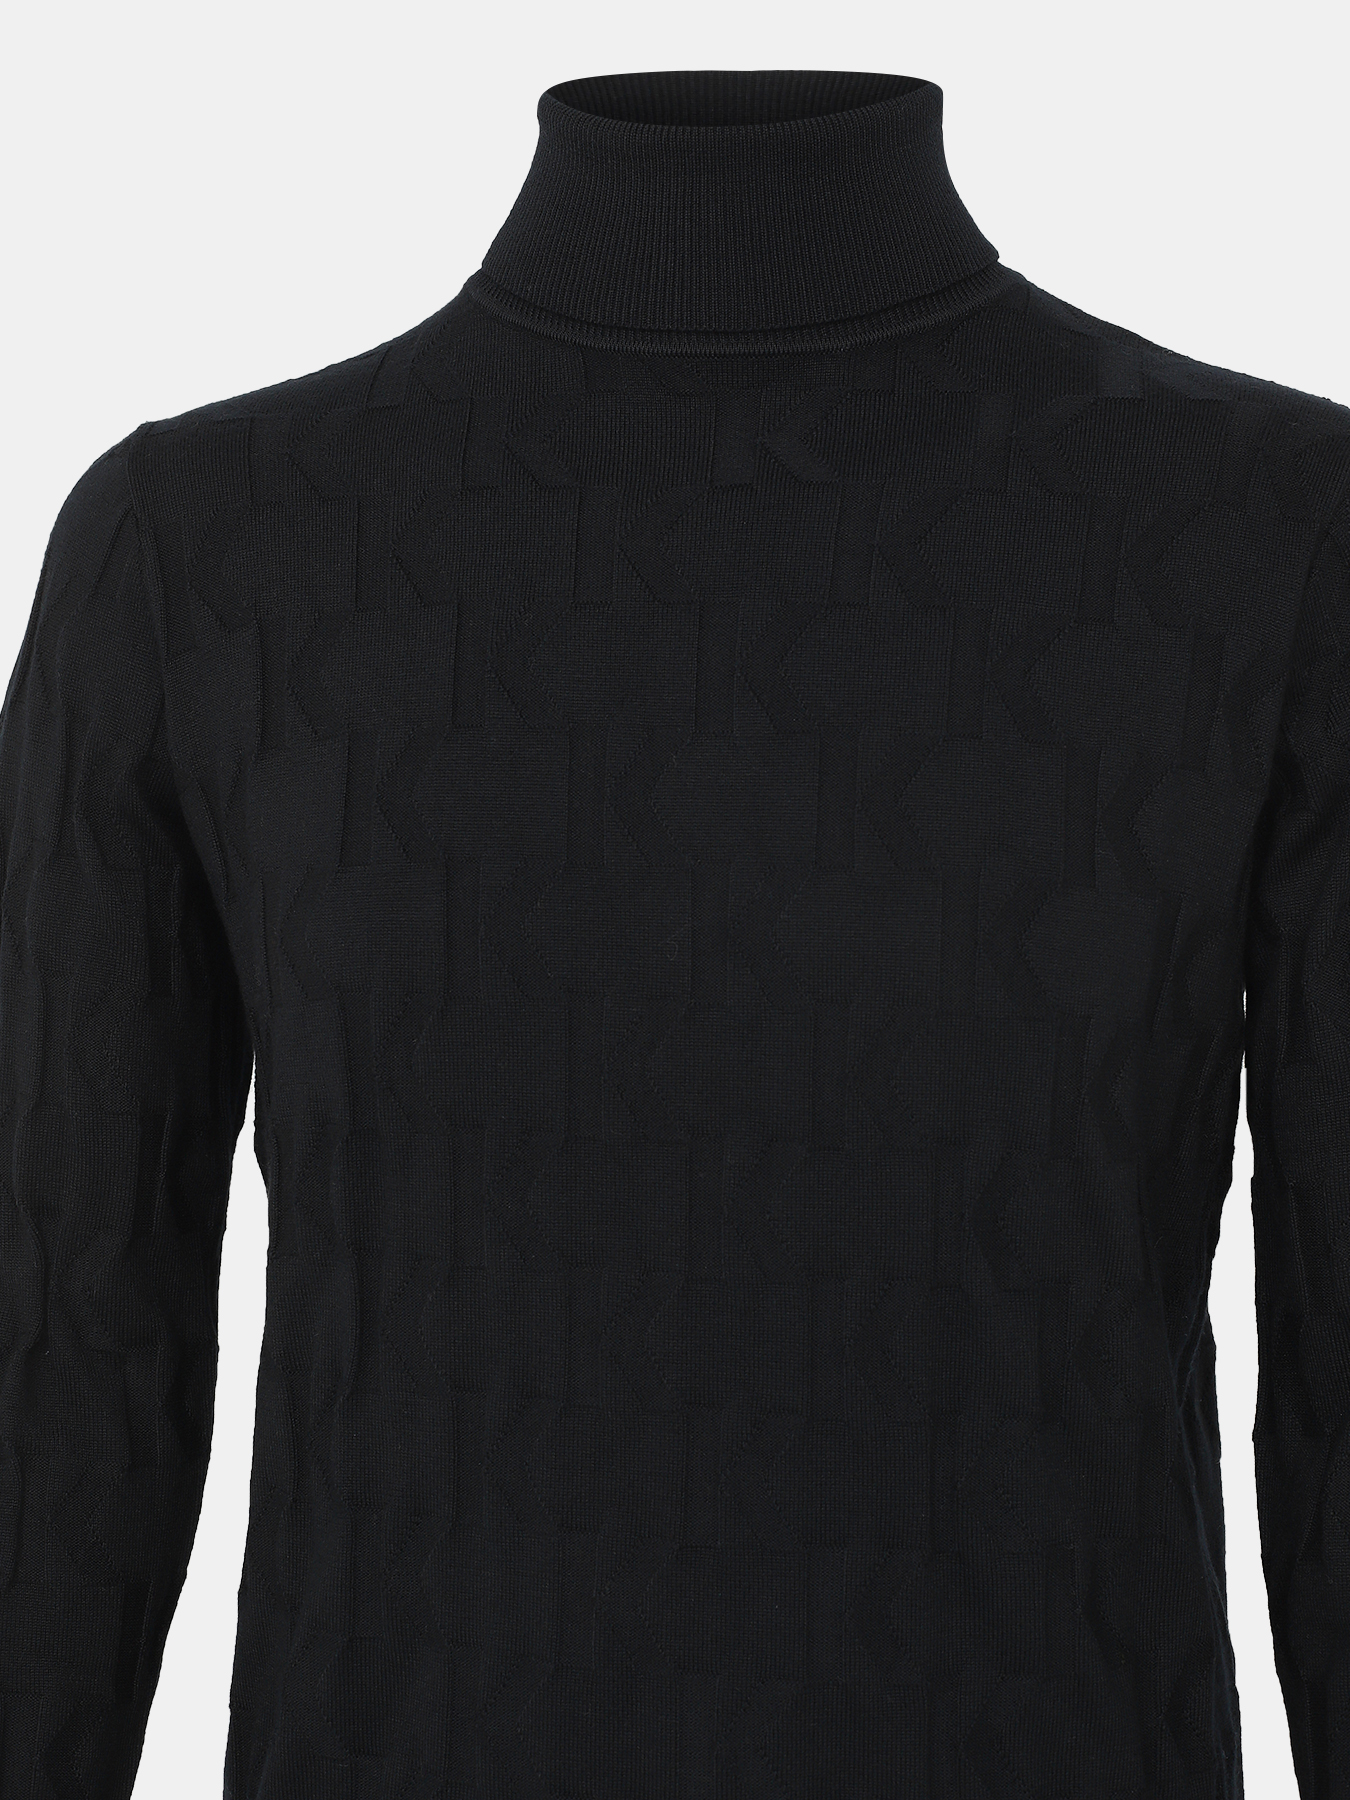 Свитер Karl Lagerfeld 388208-046, цвет черный, размер 54-56 - фото 3